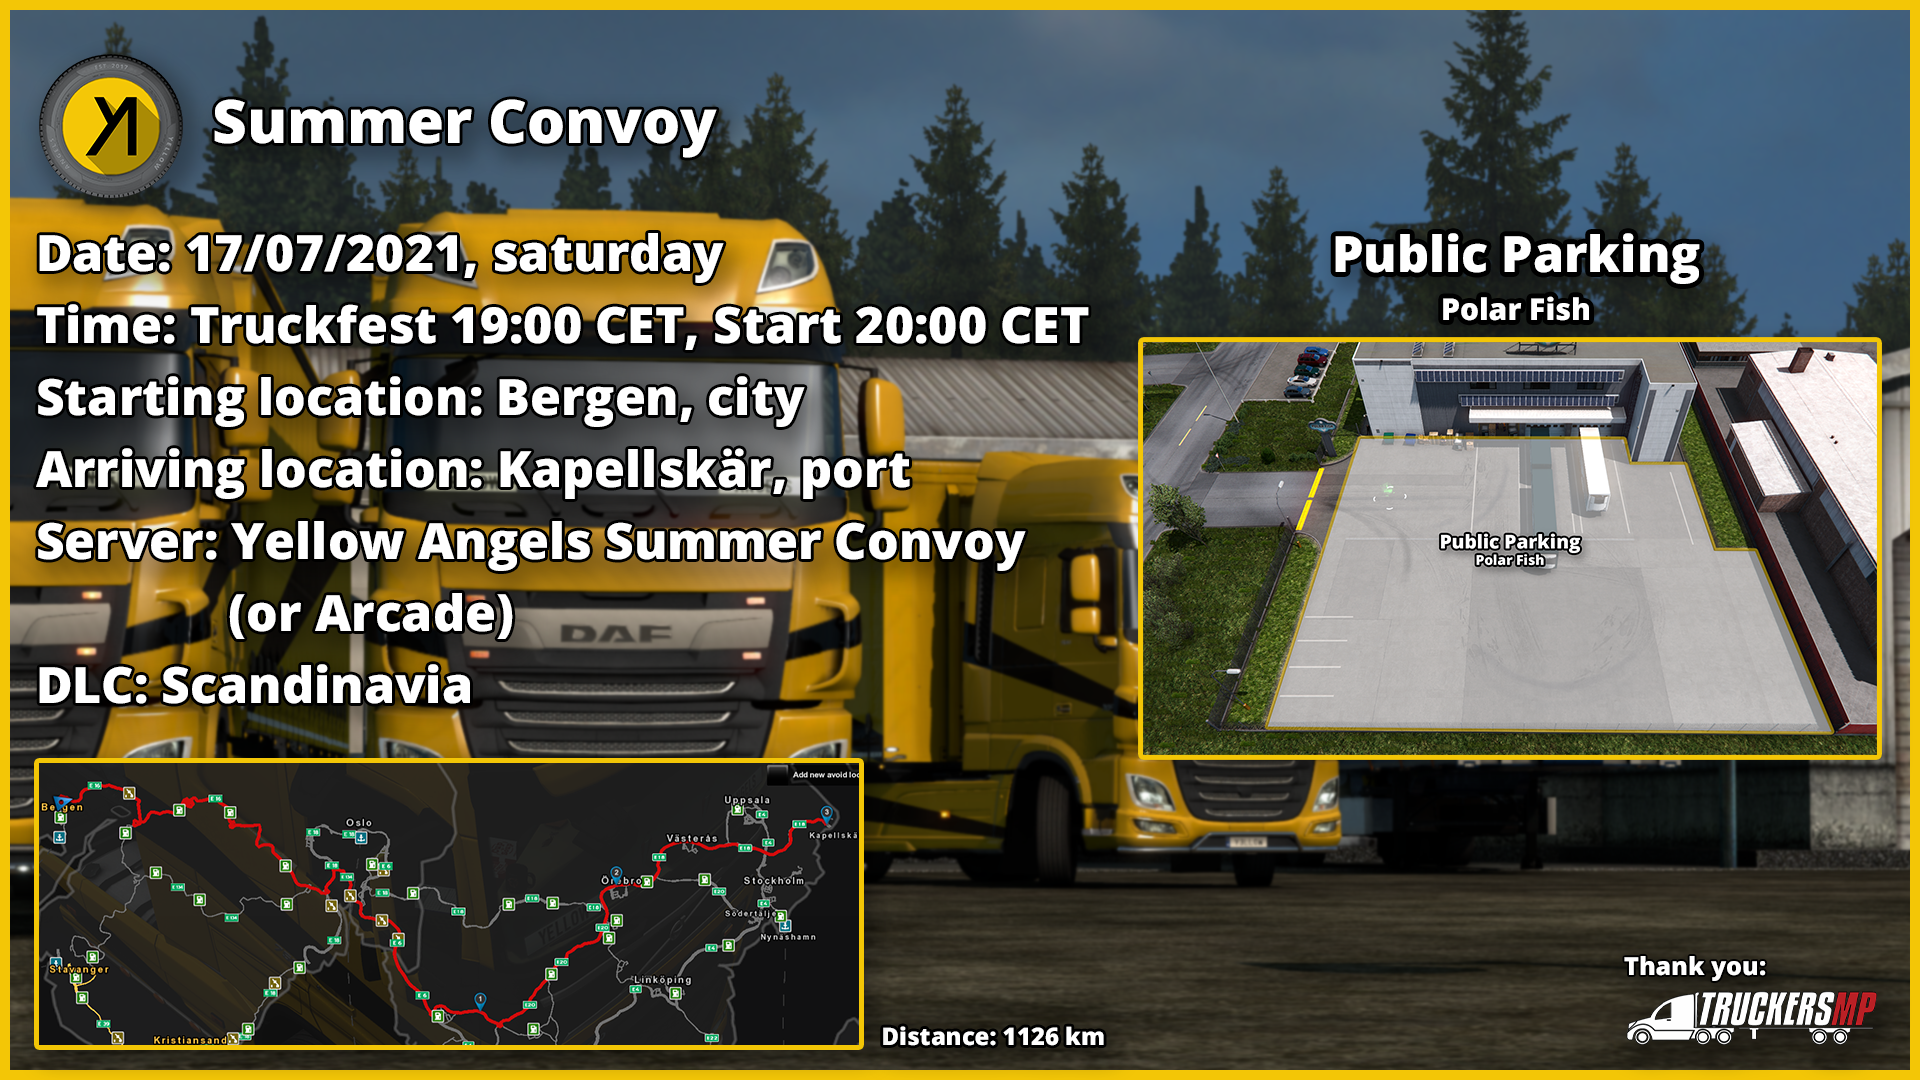 Convoy Informations